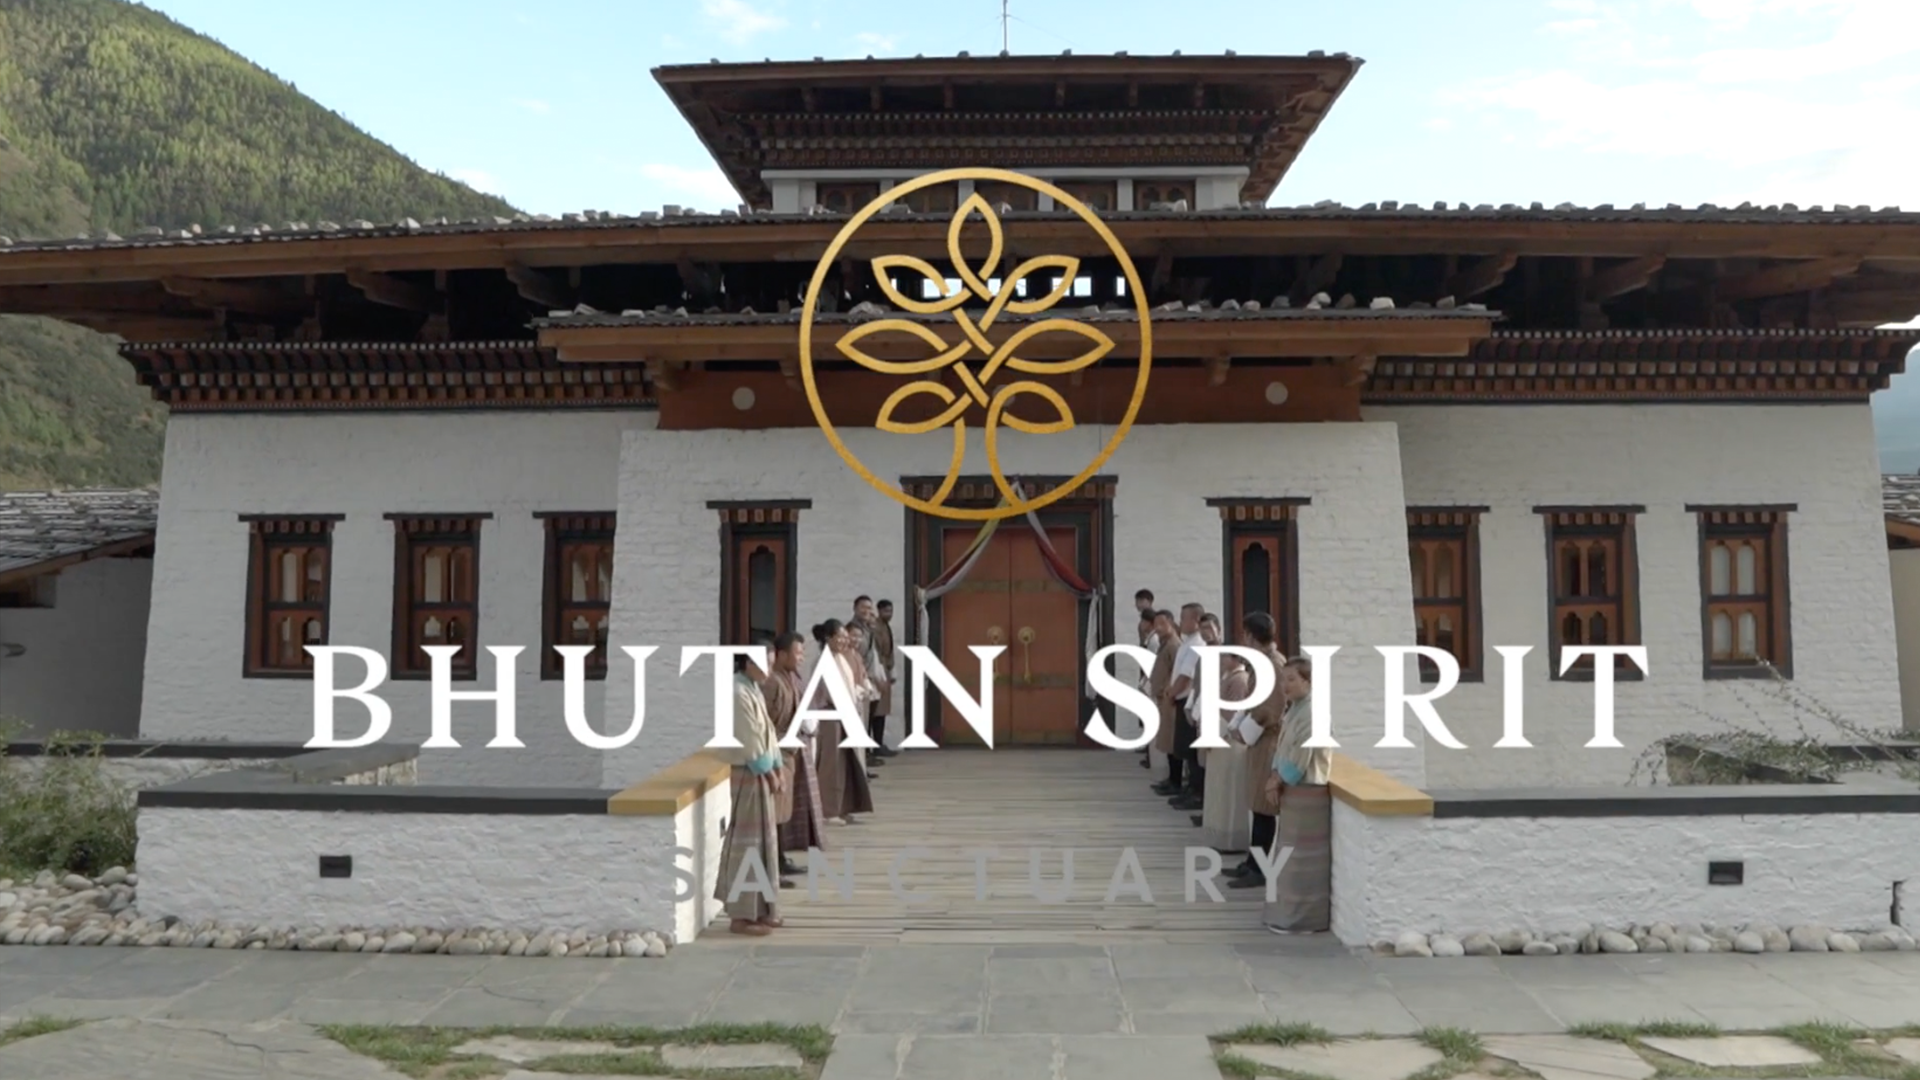 BHUTAN SPIRIT SANCTUARY